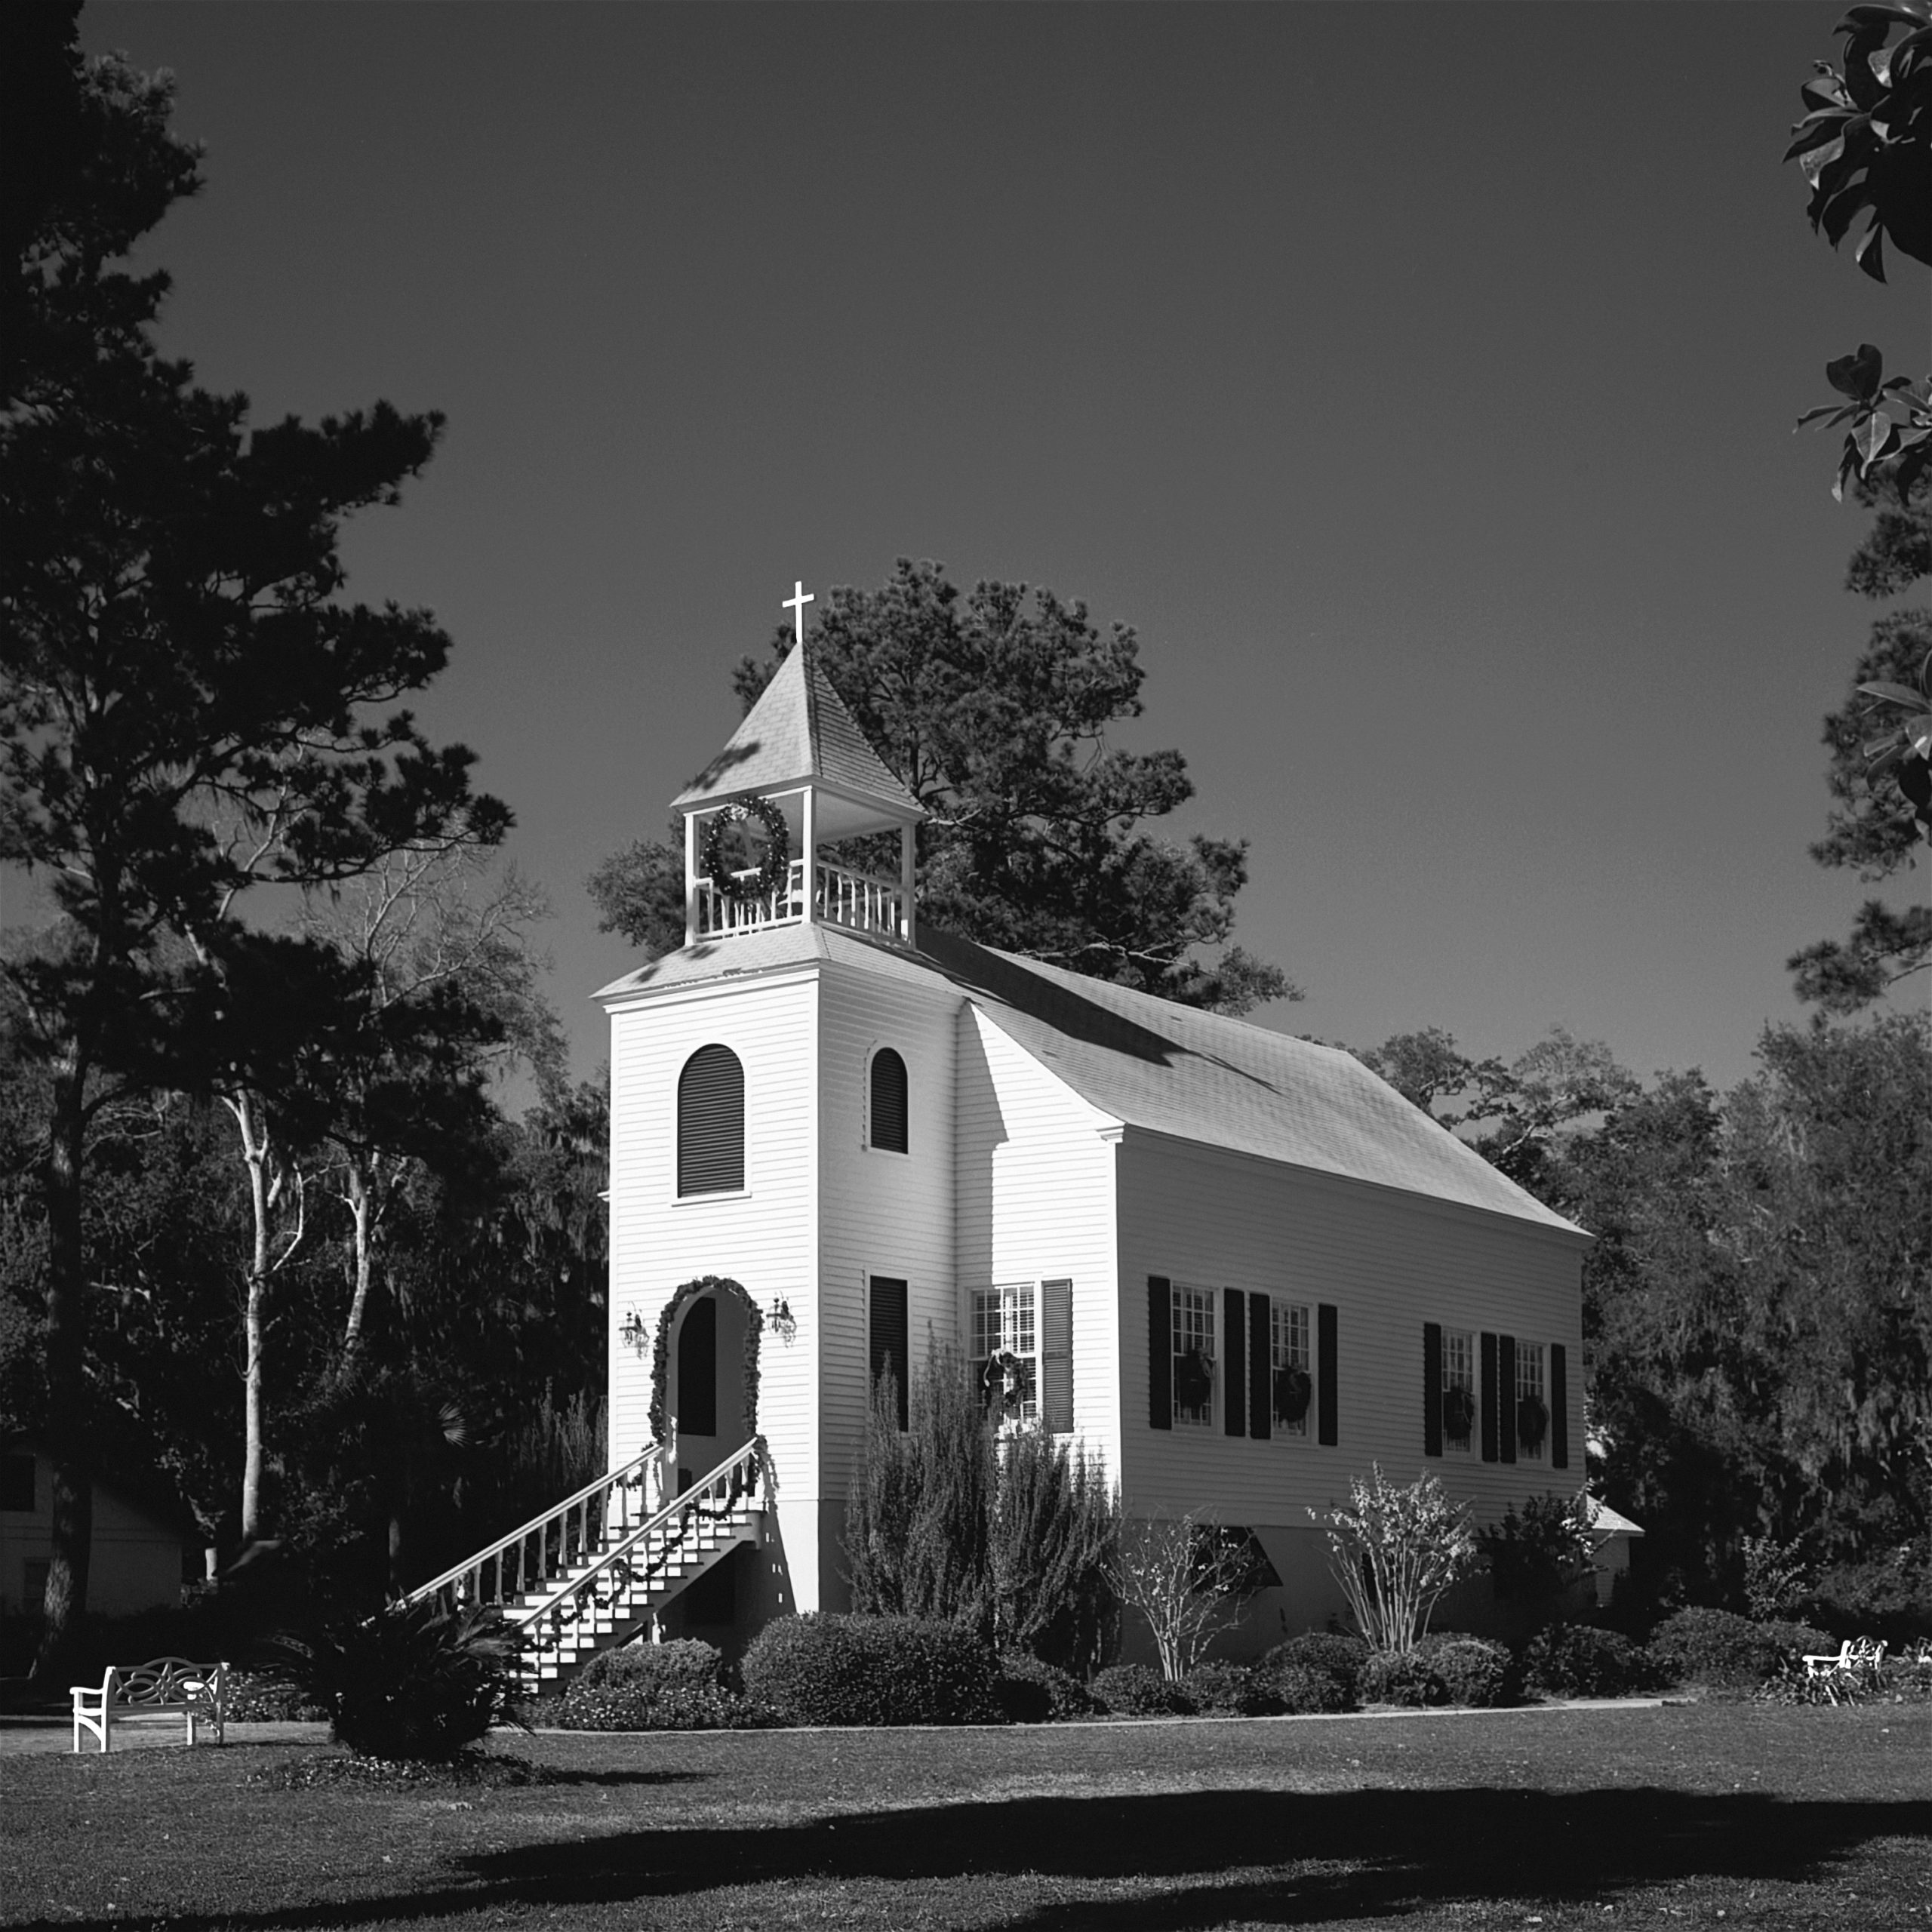 Little church in St Marys, GA. Captured on Film